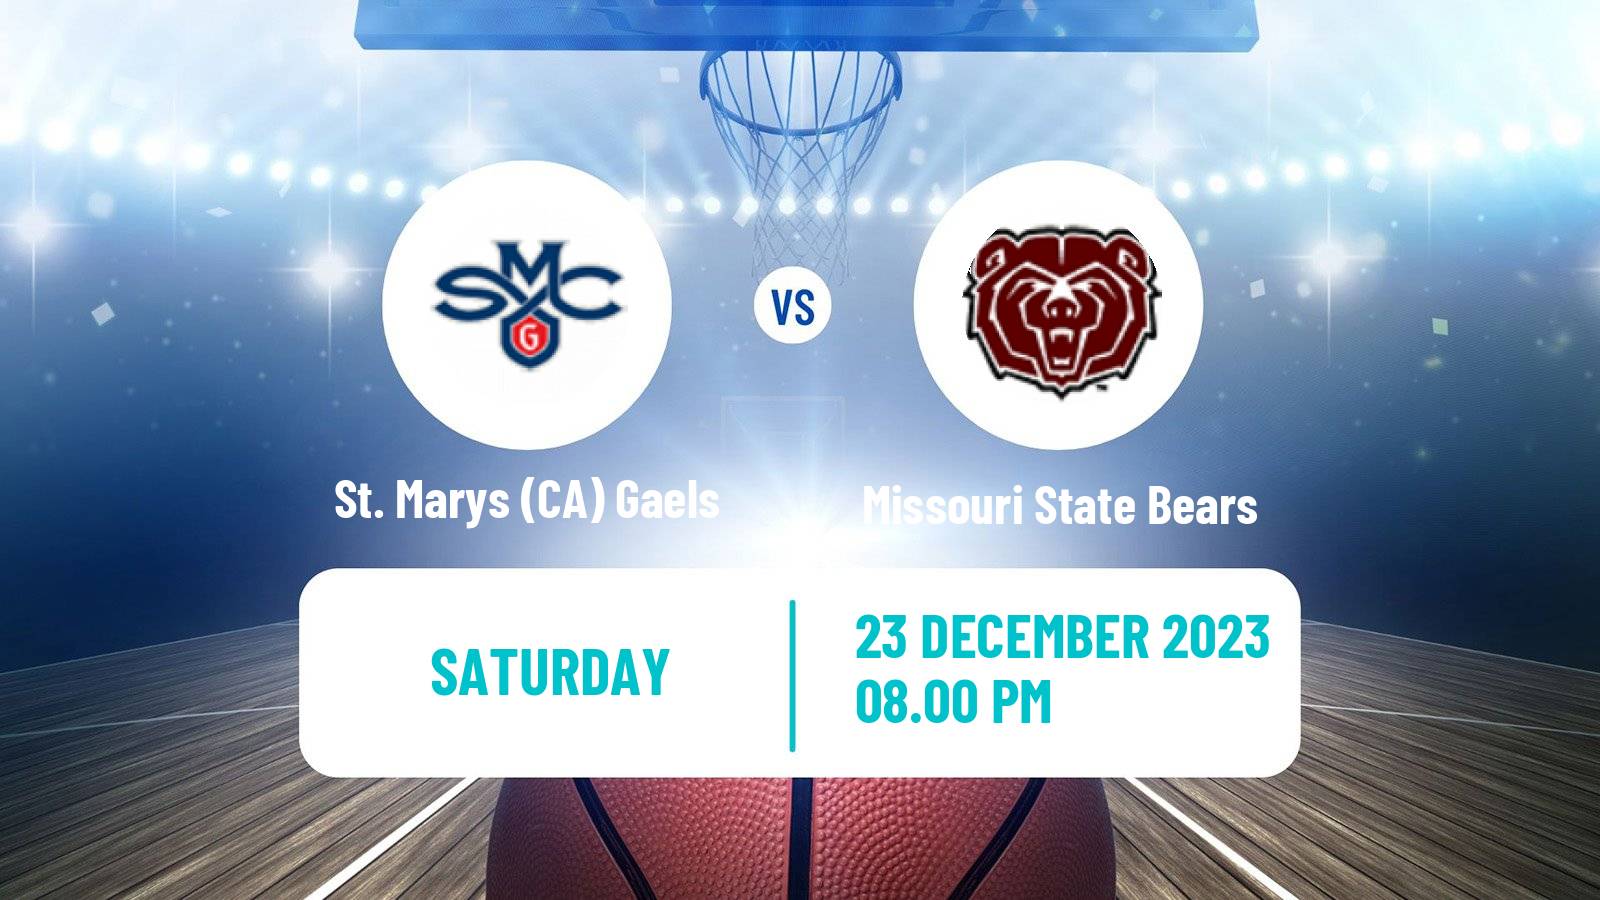 Basketball NCAA College Basketball St. Marys (CA) Gaels - Missouri State Bears